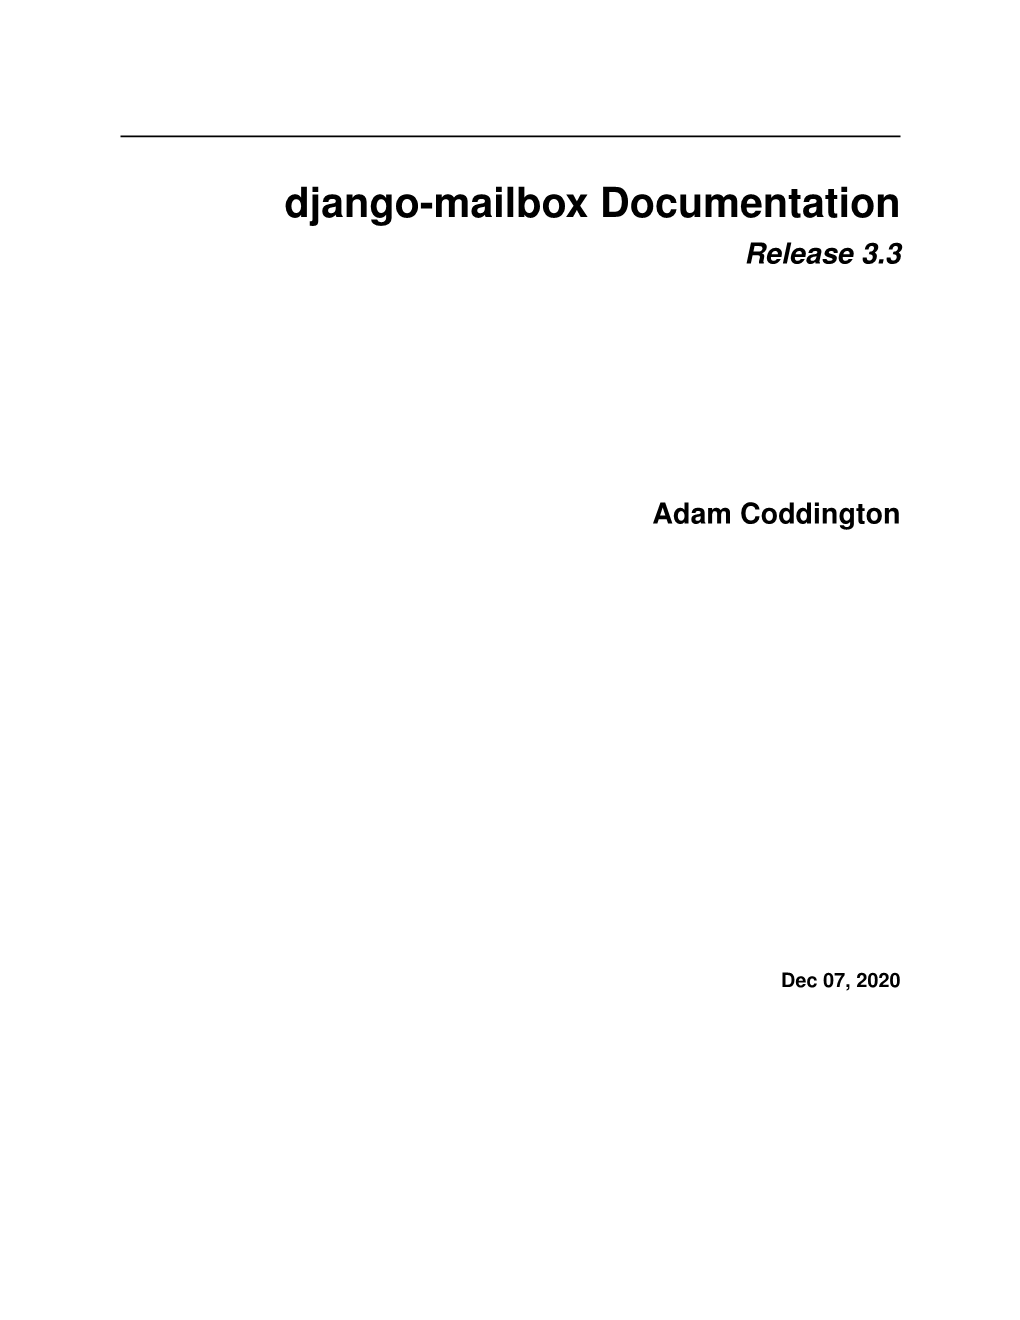 Django-Mailbox Documentation Release 3.3